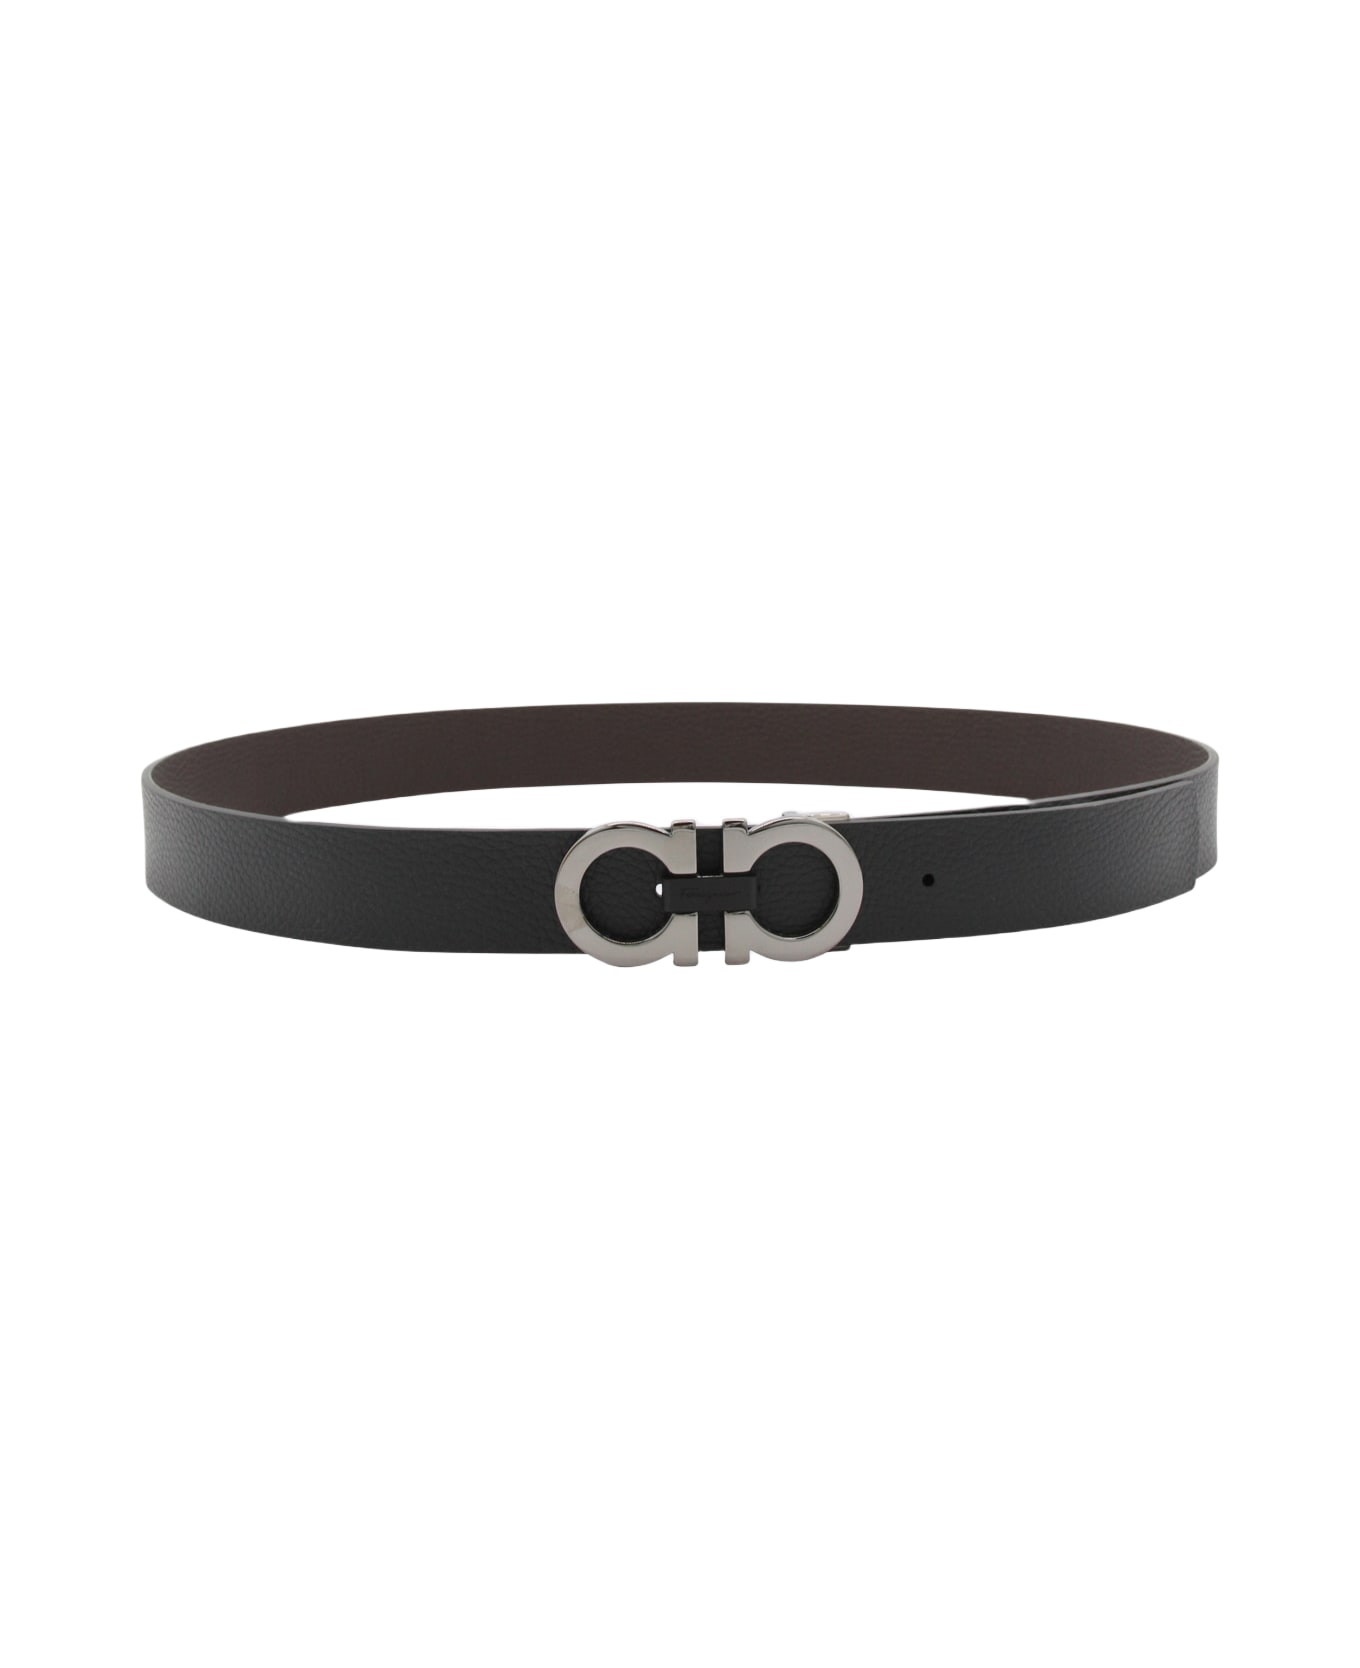 Ferragamo Black And Silver Leather Gancini Belt - NERO || HICKORY